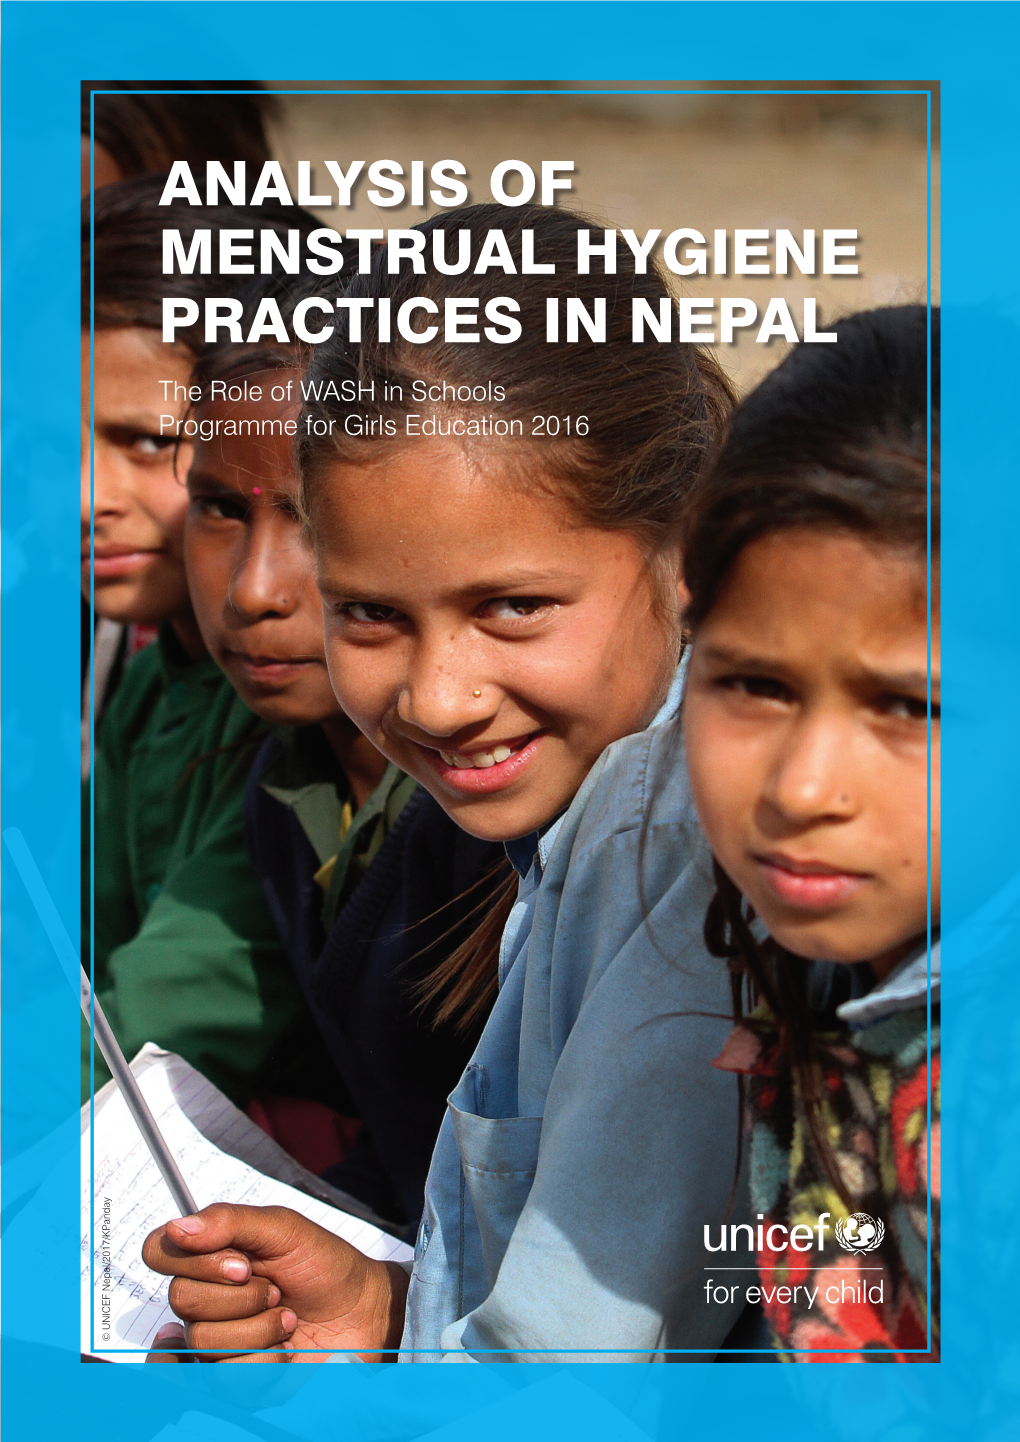 Unicef- Analysis of Menstrual Hygiene Practices in Nepal